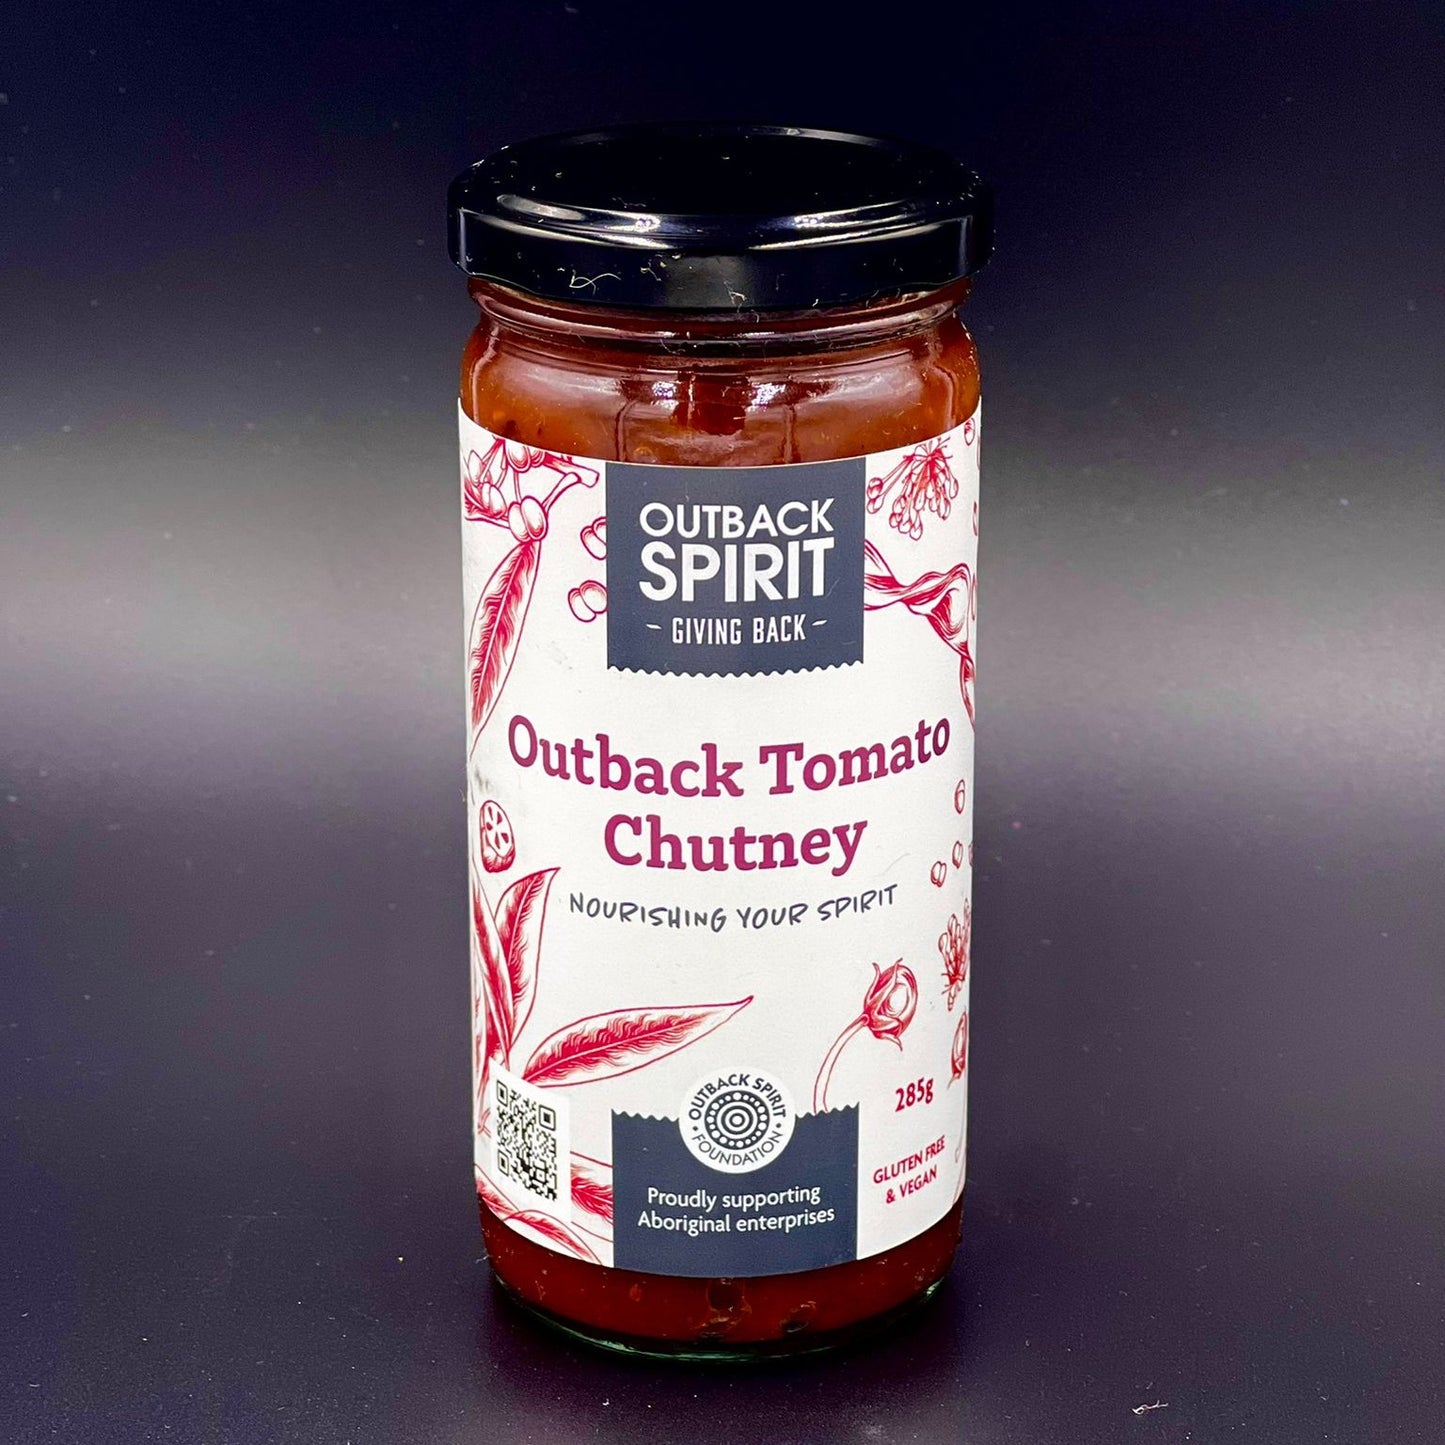 Outback Spirit Sauces